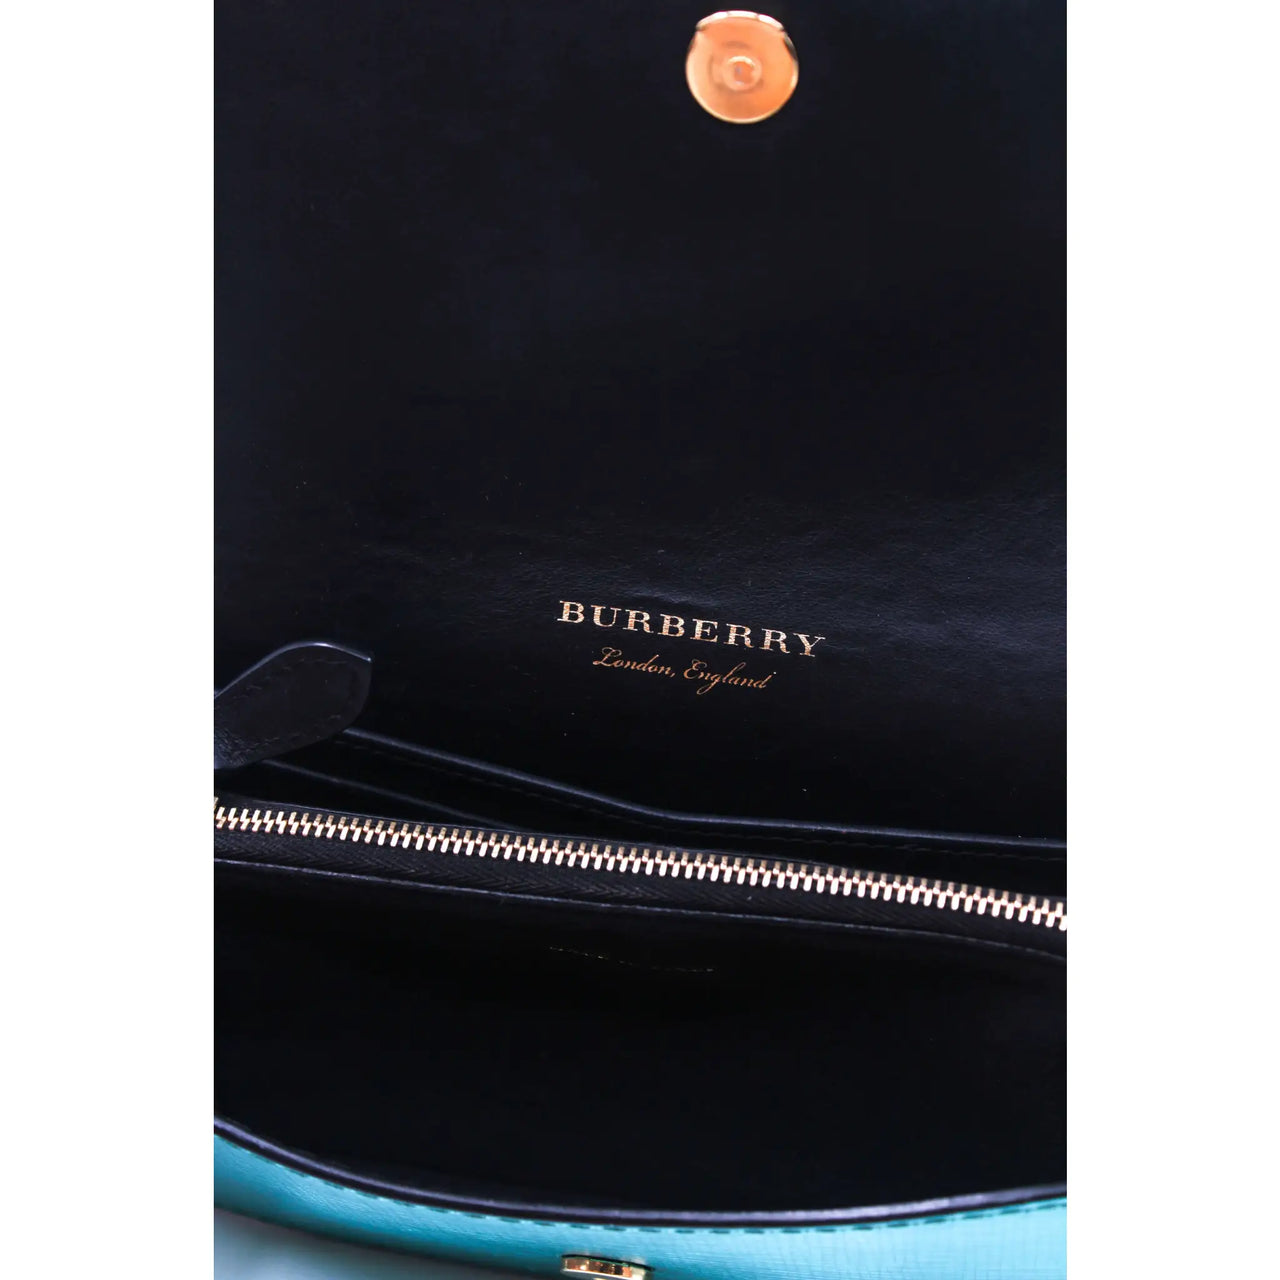 Burberry Bridle Shoulder Bag Belgium, SAVE 30% 